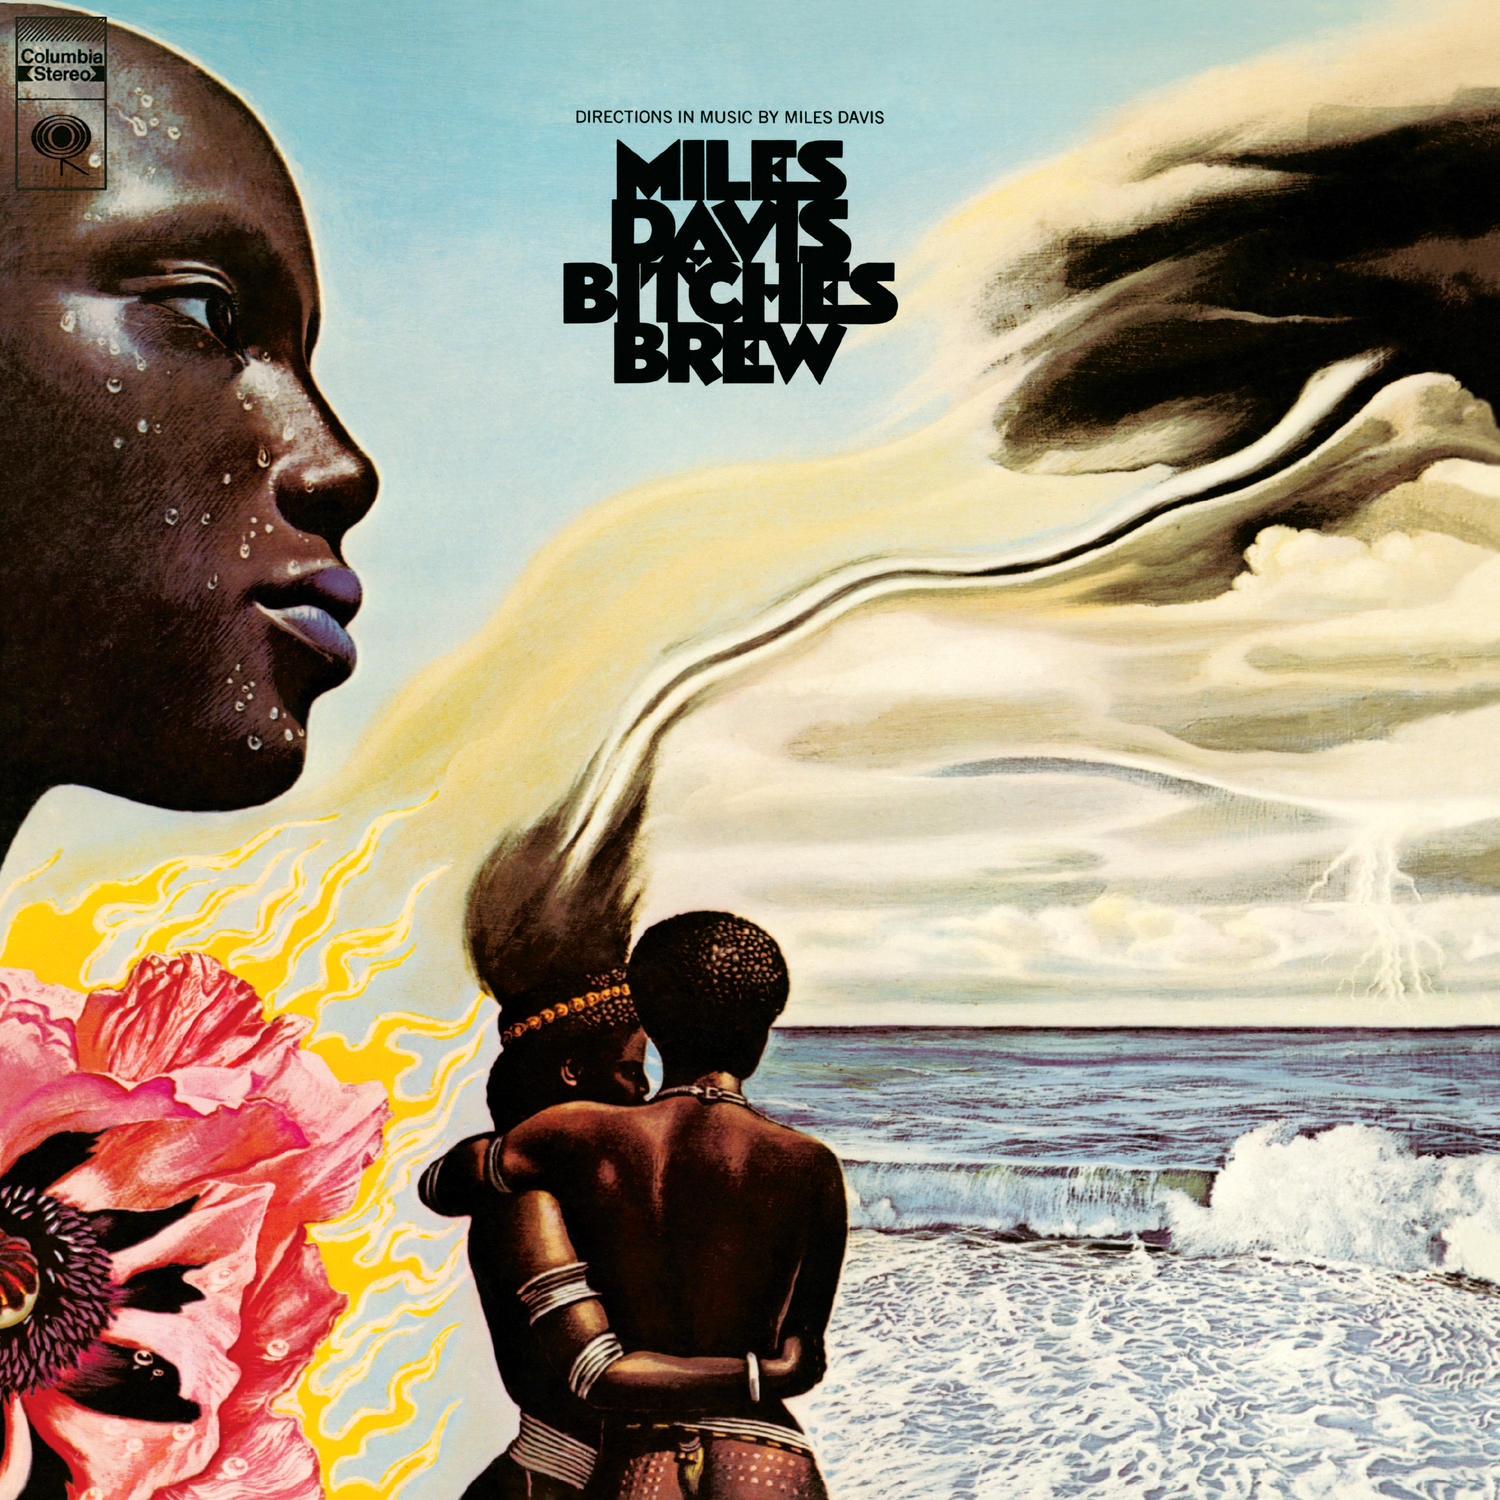 Davis (Vinyl) BREW - BITCHES - Miles